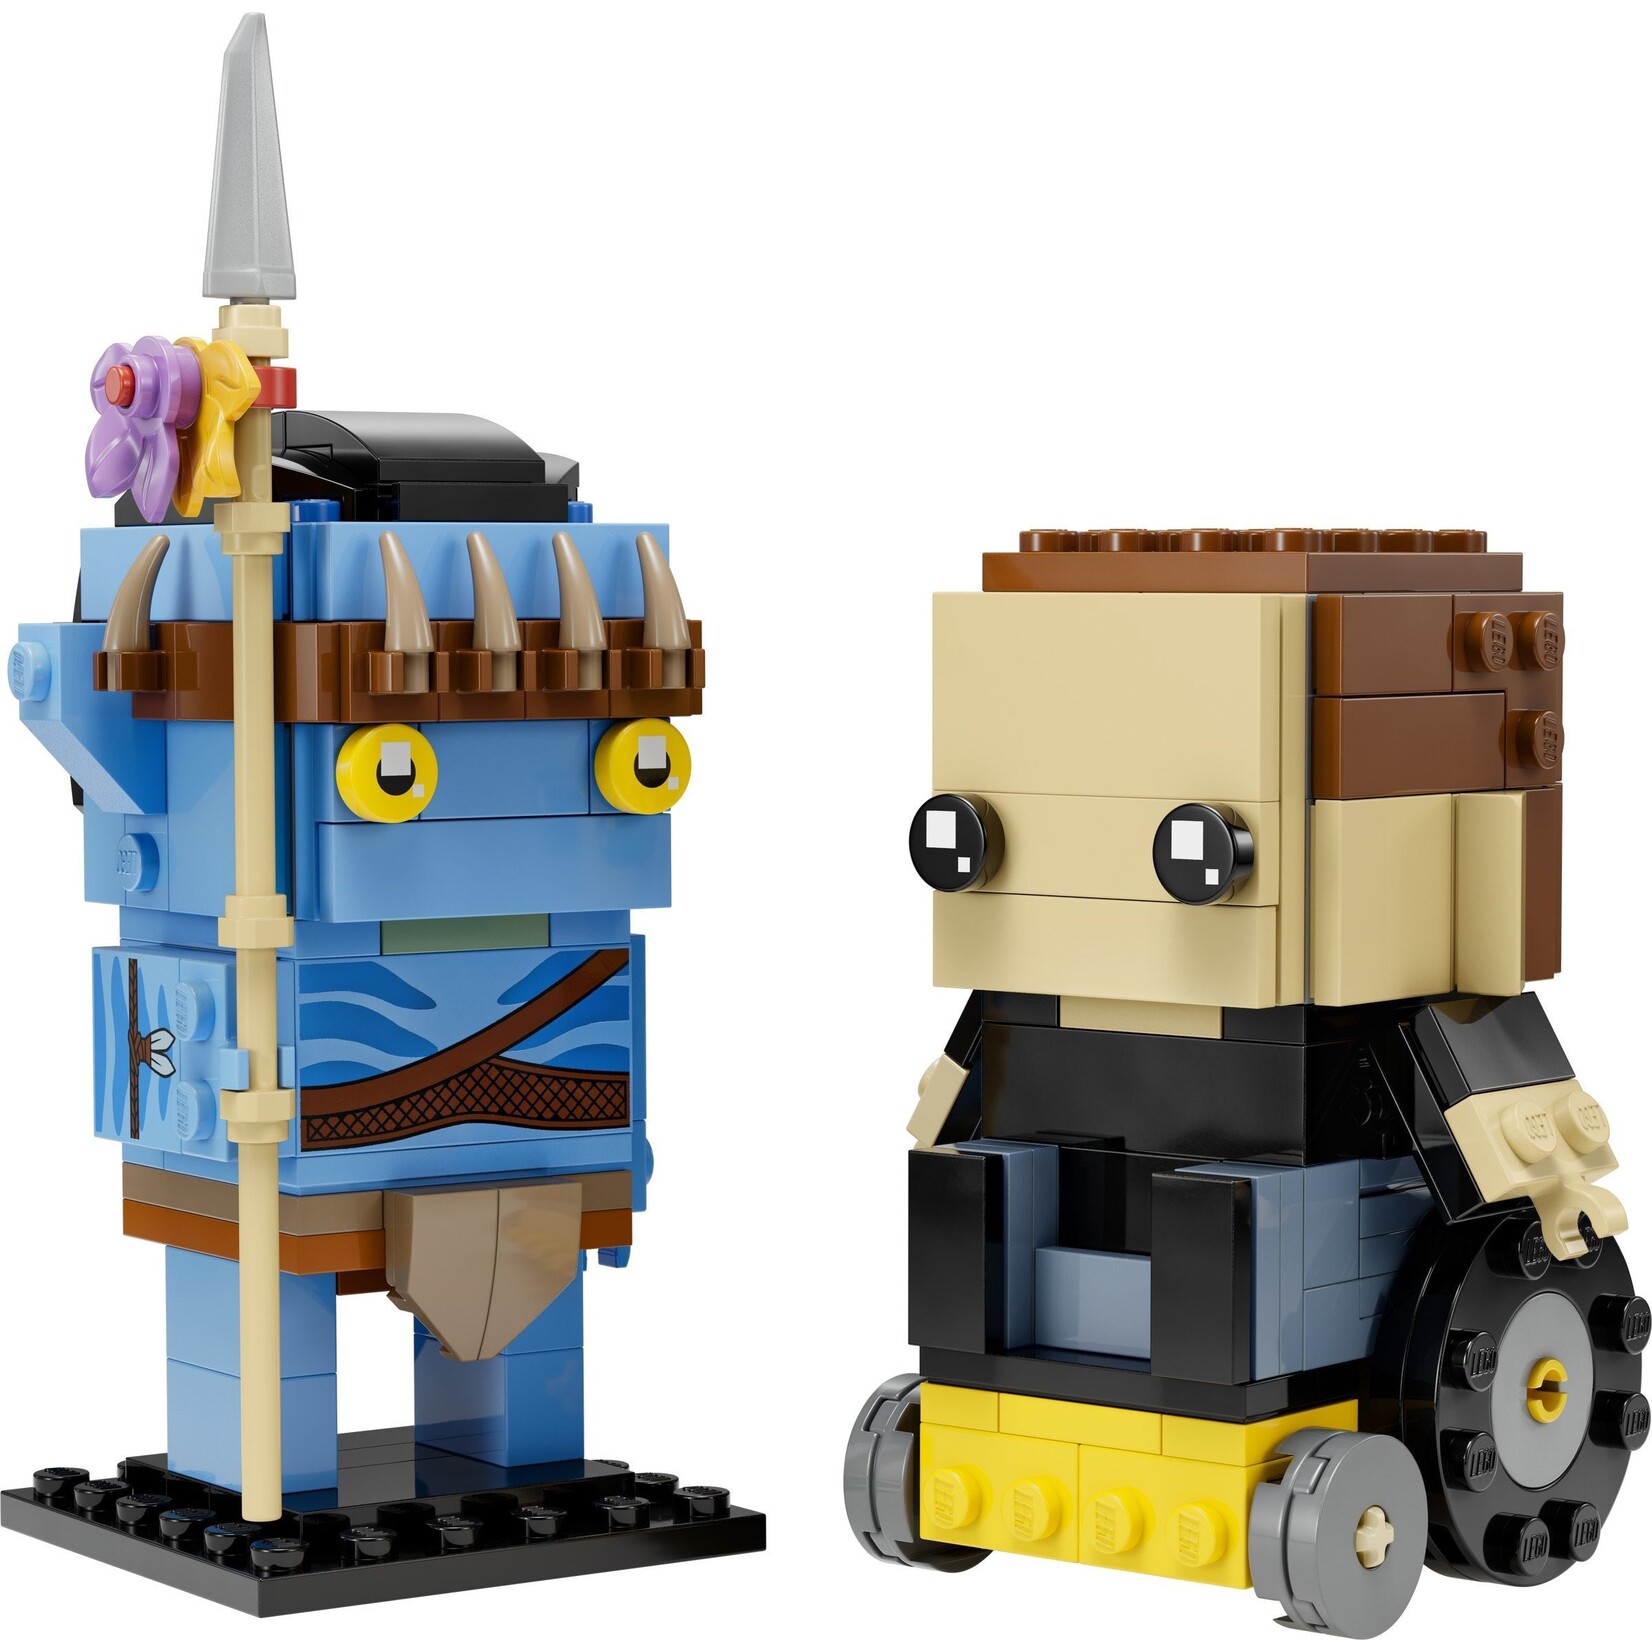 LEGO Jake Sully en zijn Avatar - 40554